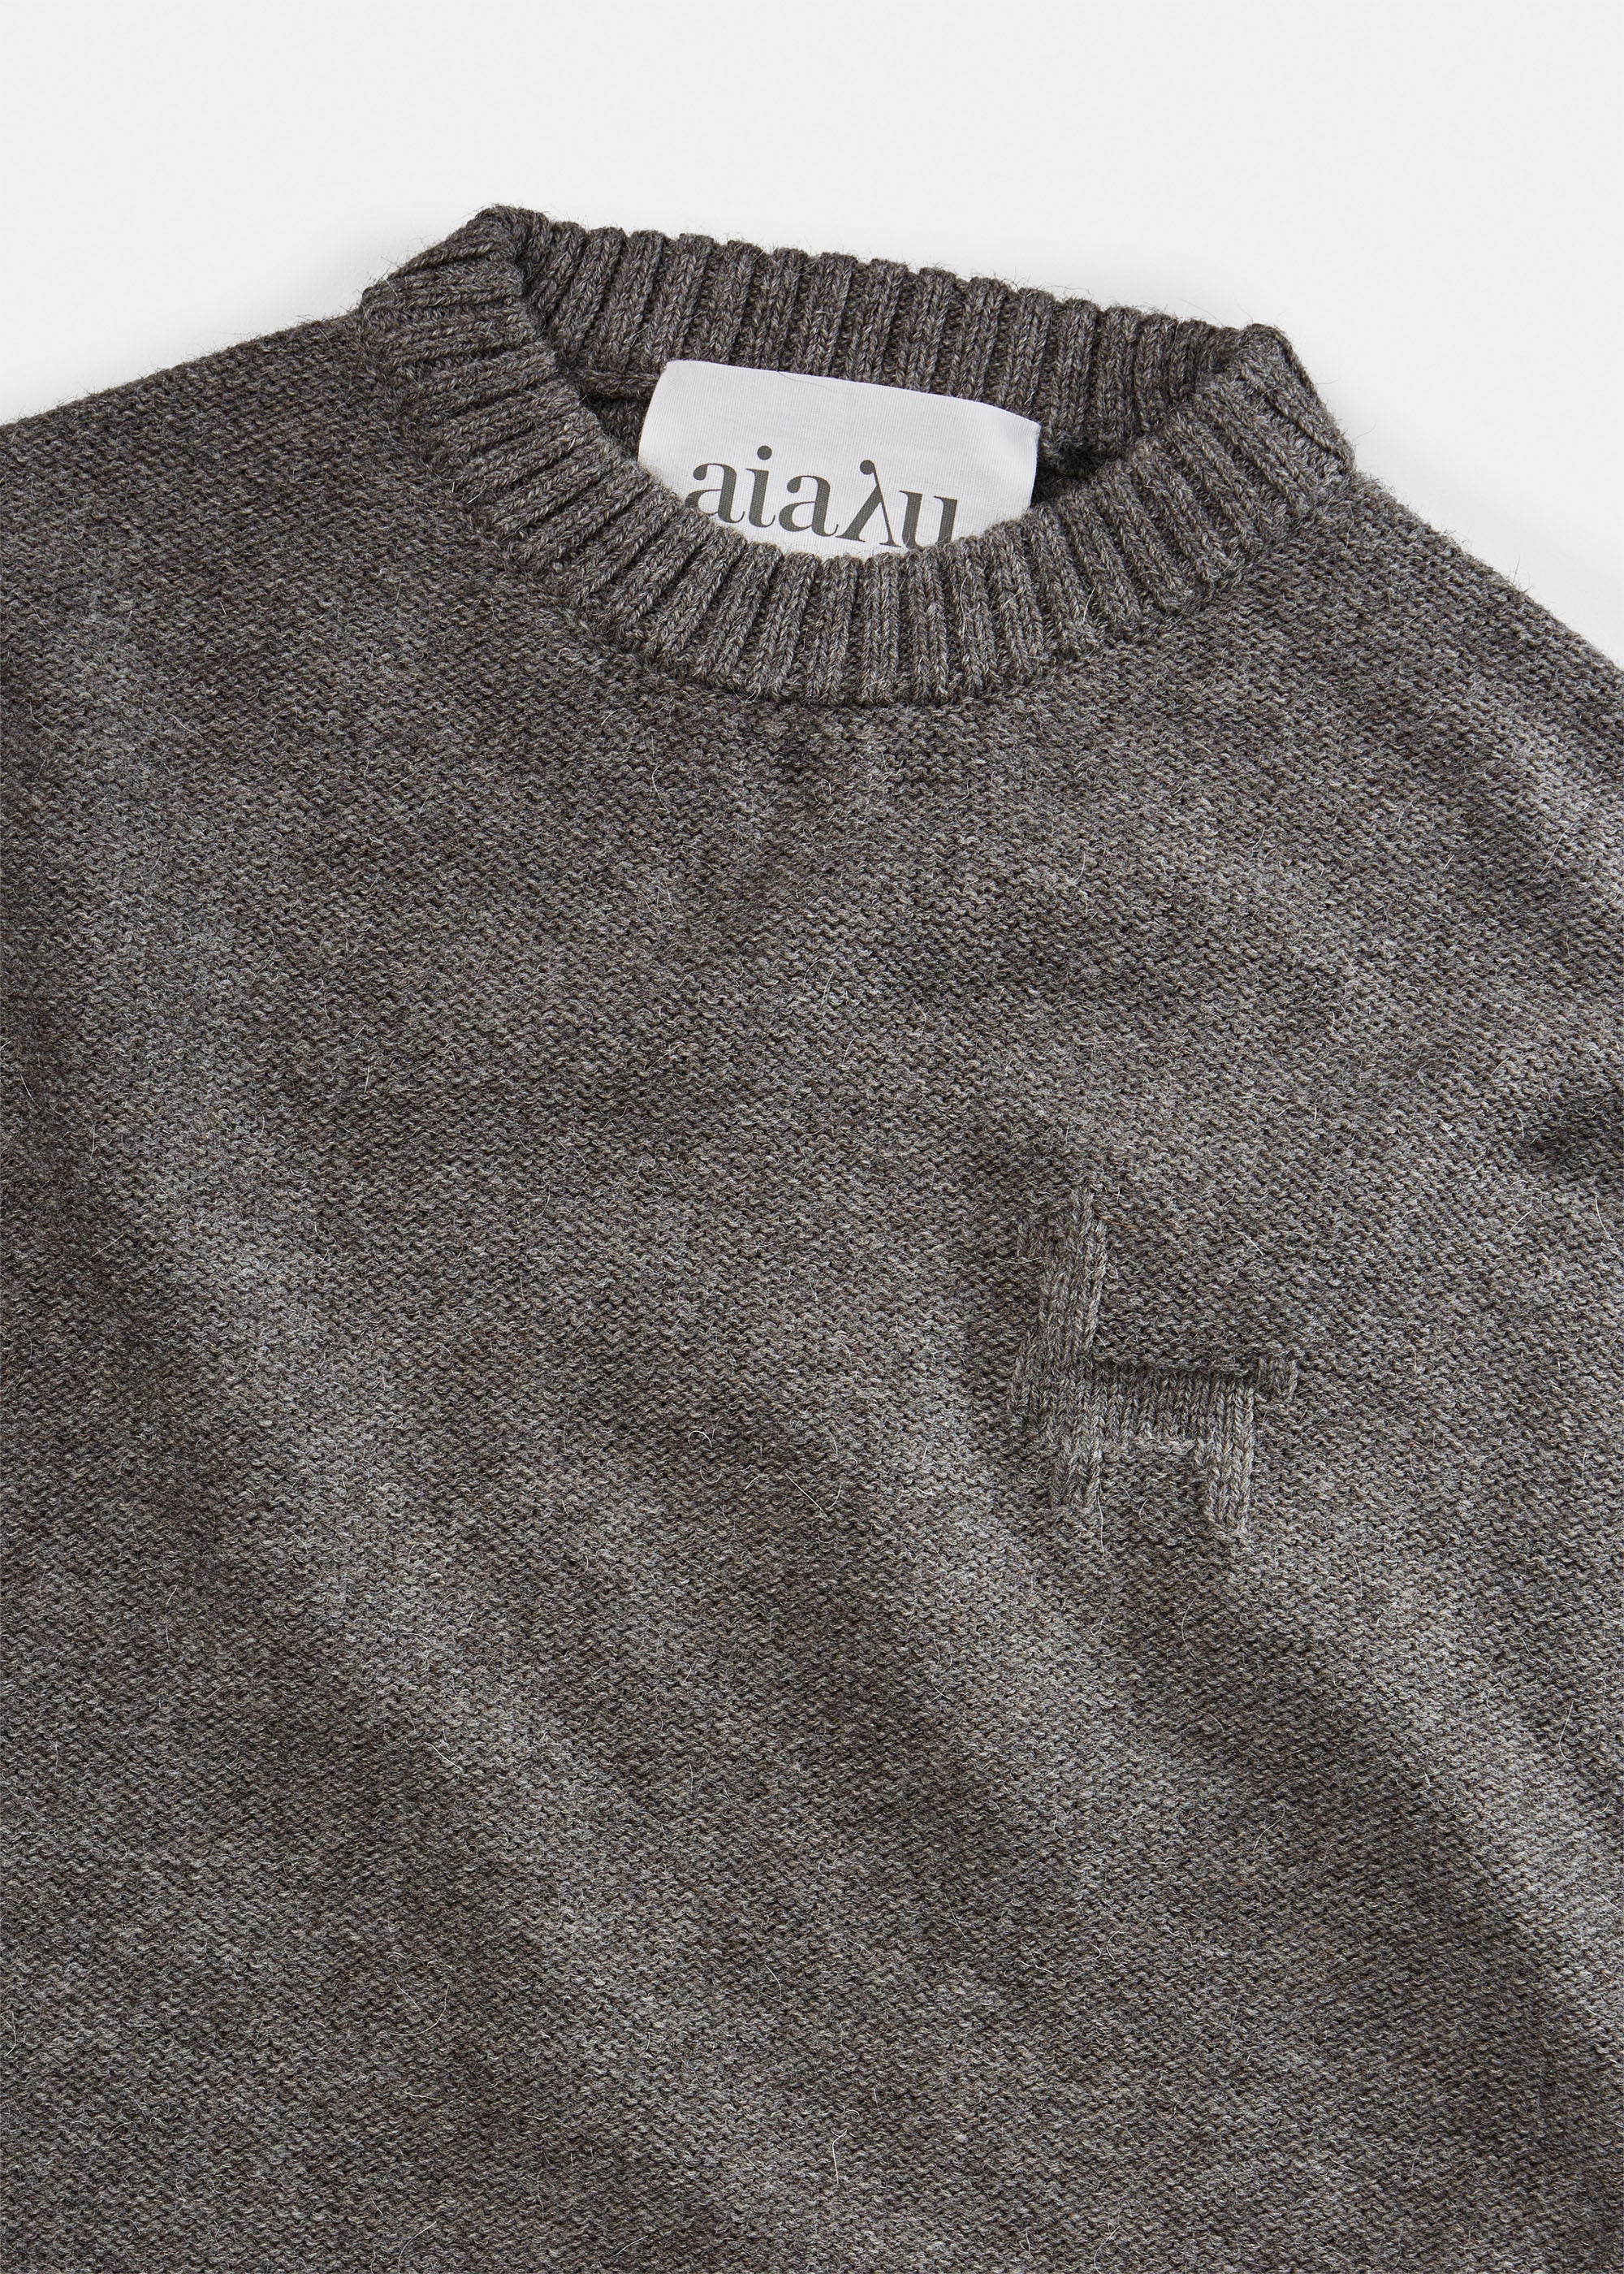 Highland juna wool sweater | Pure Grey